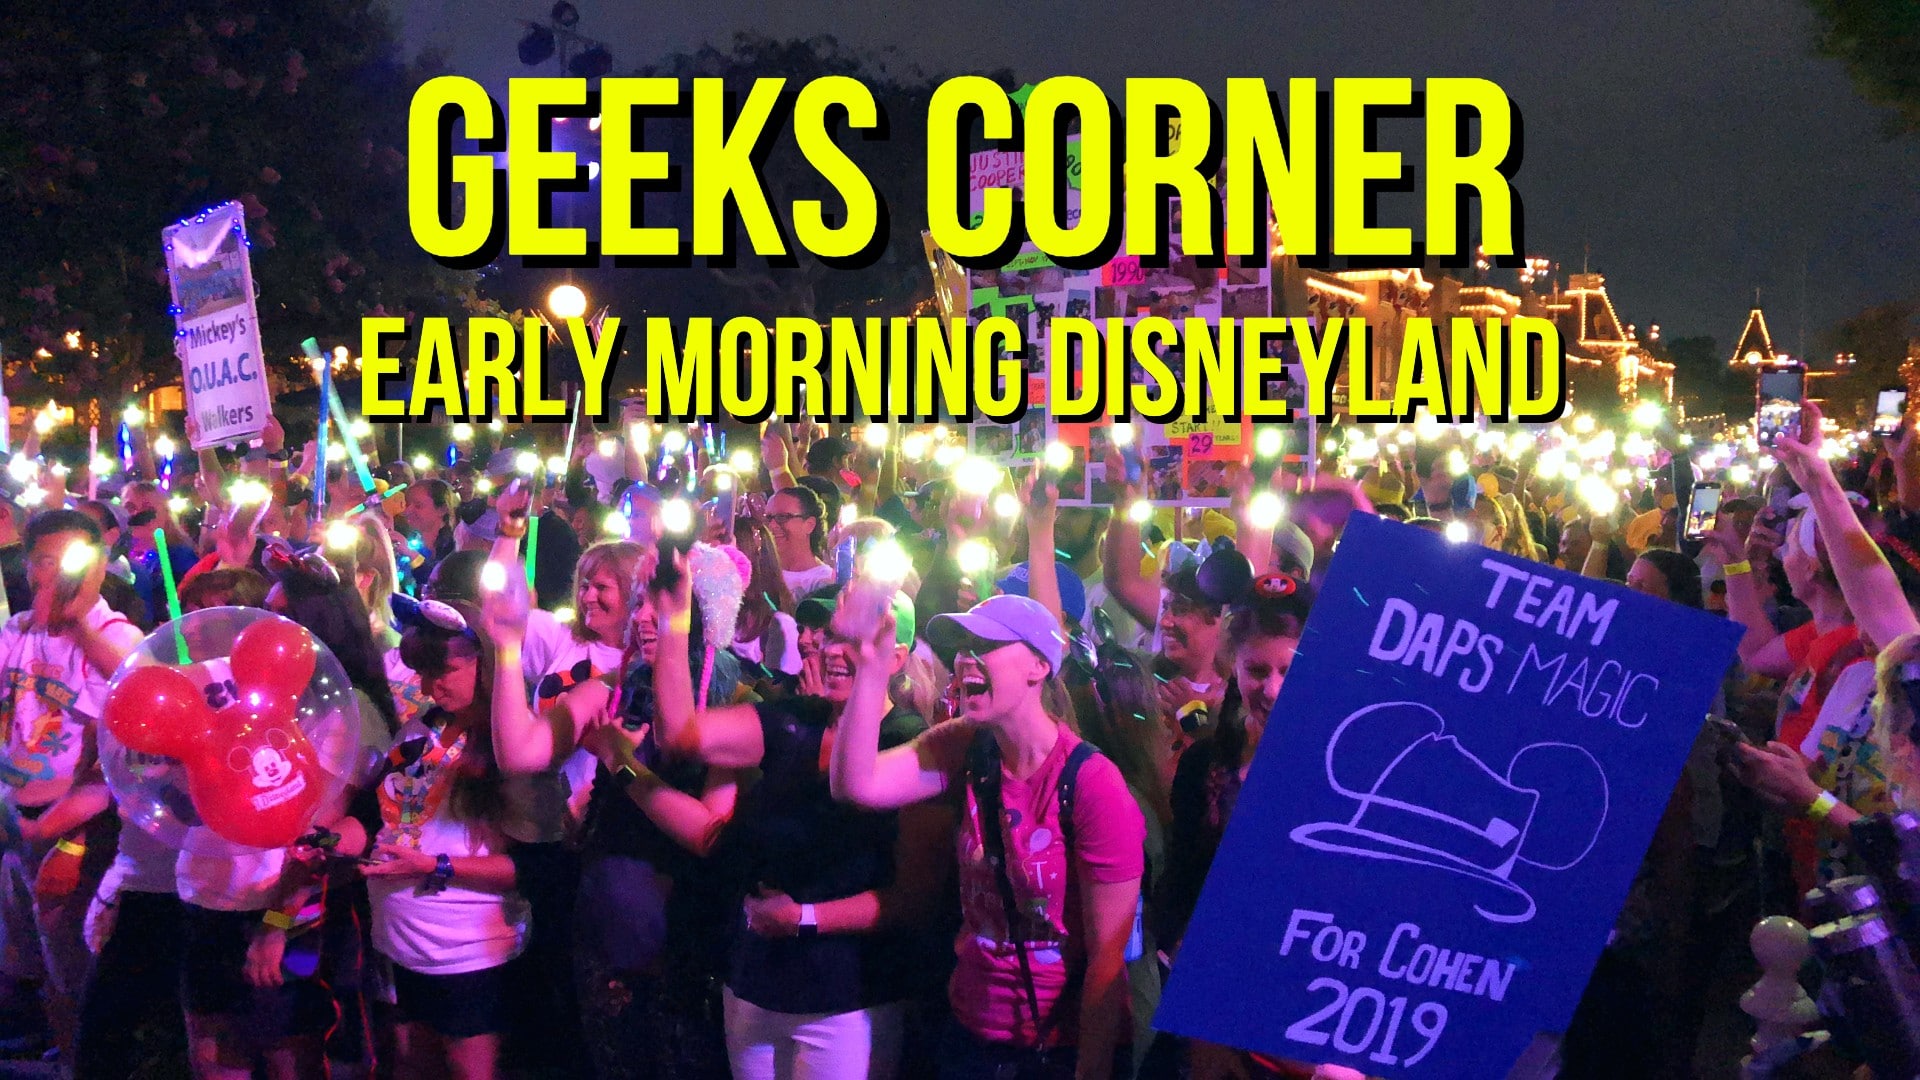 Early Morning Disneyland - GEEKS CORNER